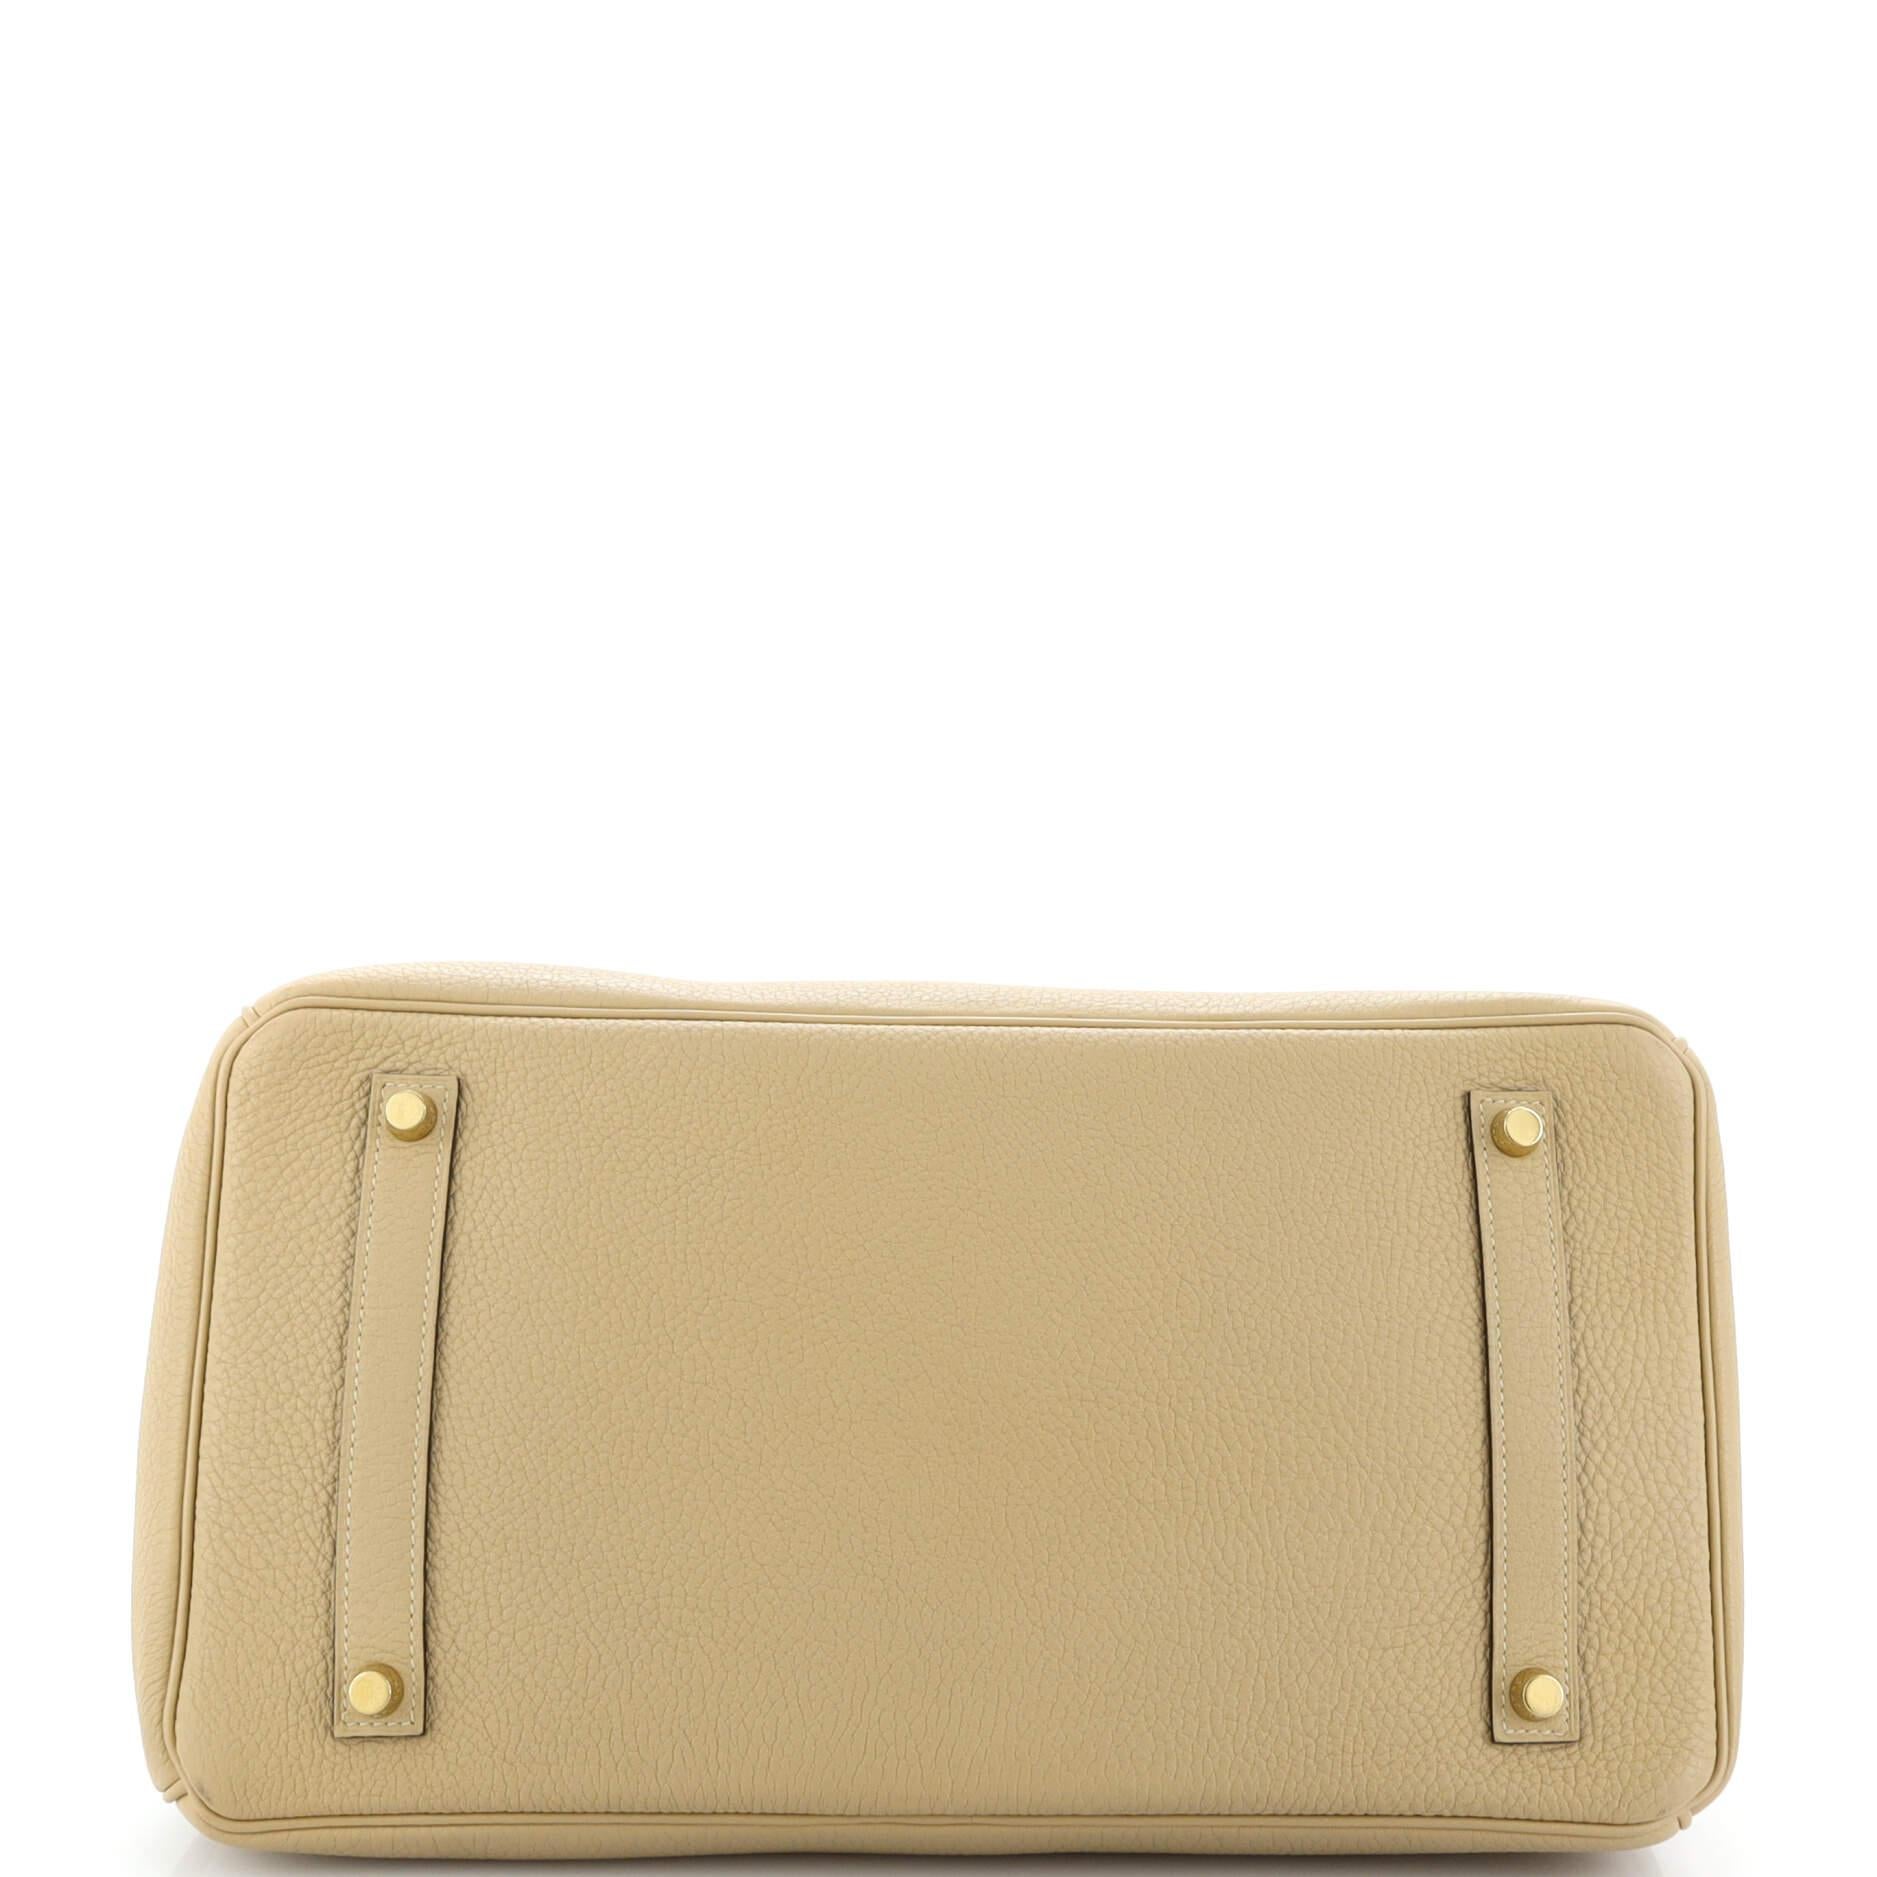 Hermes Birkin Handbag Light Togo with Gold Hardware 35 1